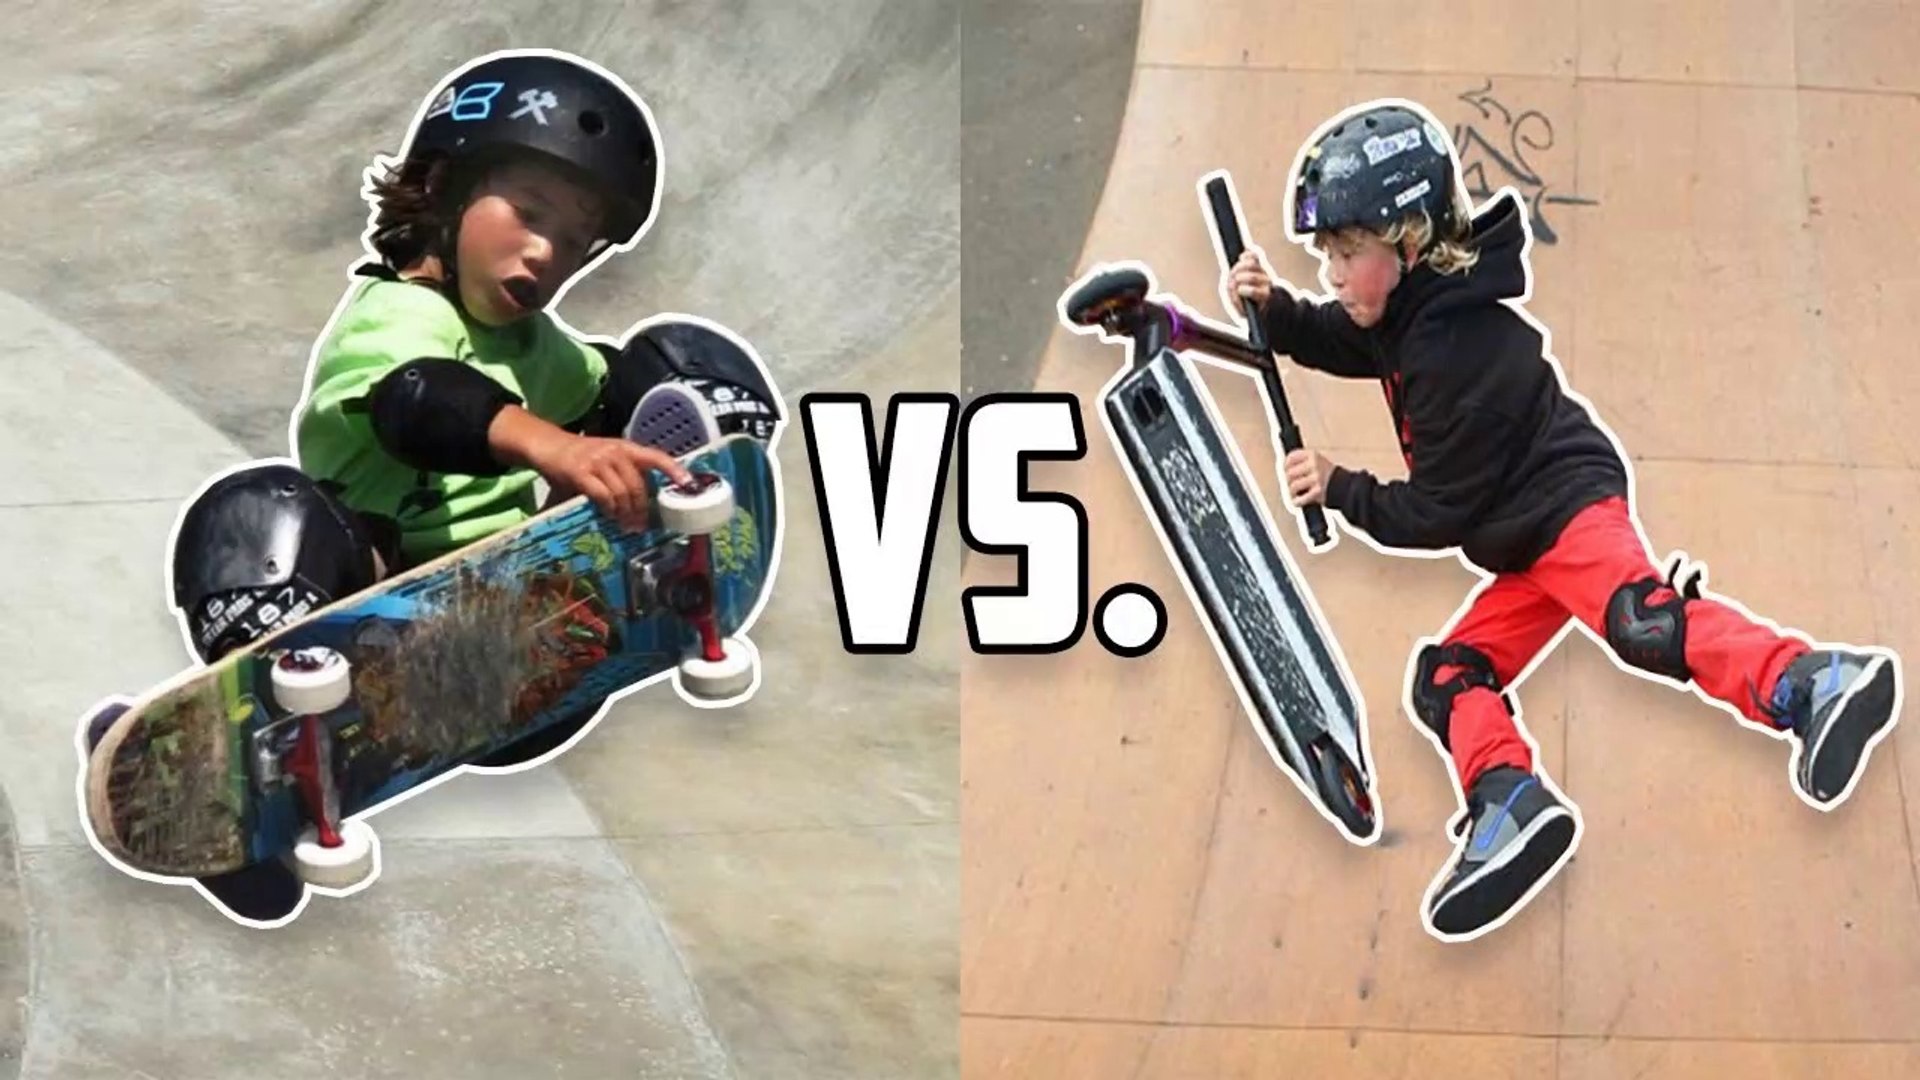 Skateboard Kids vs Scooter Kids (Skaters vs Scooters) - video Dailymotion